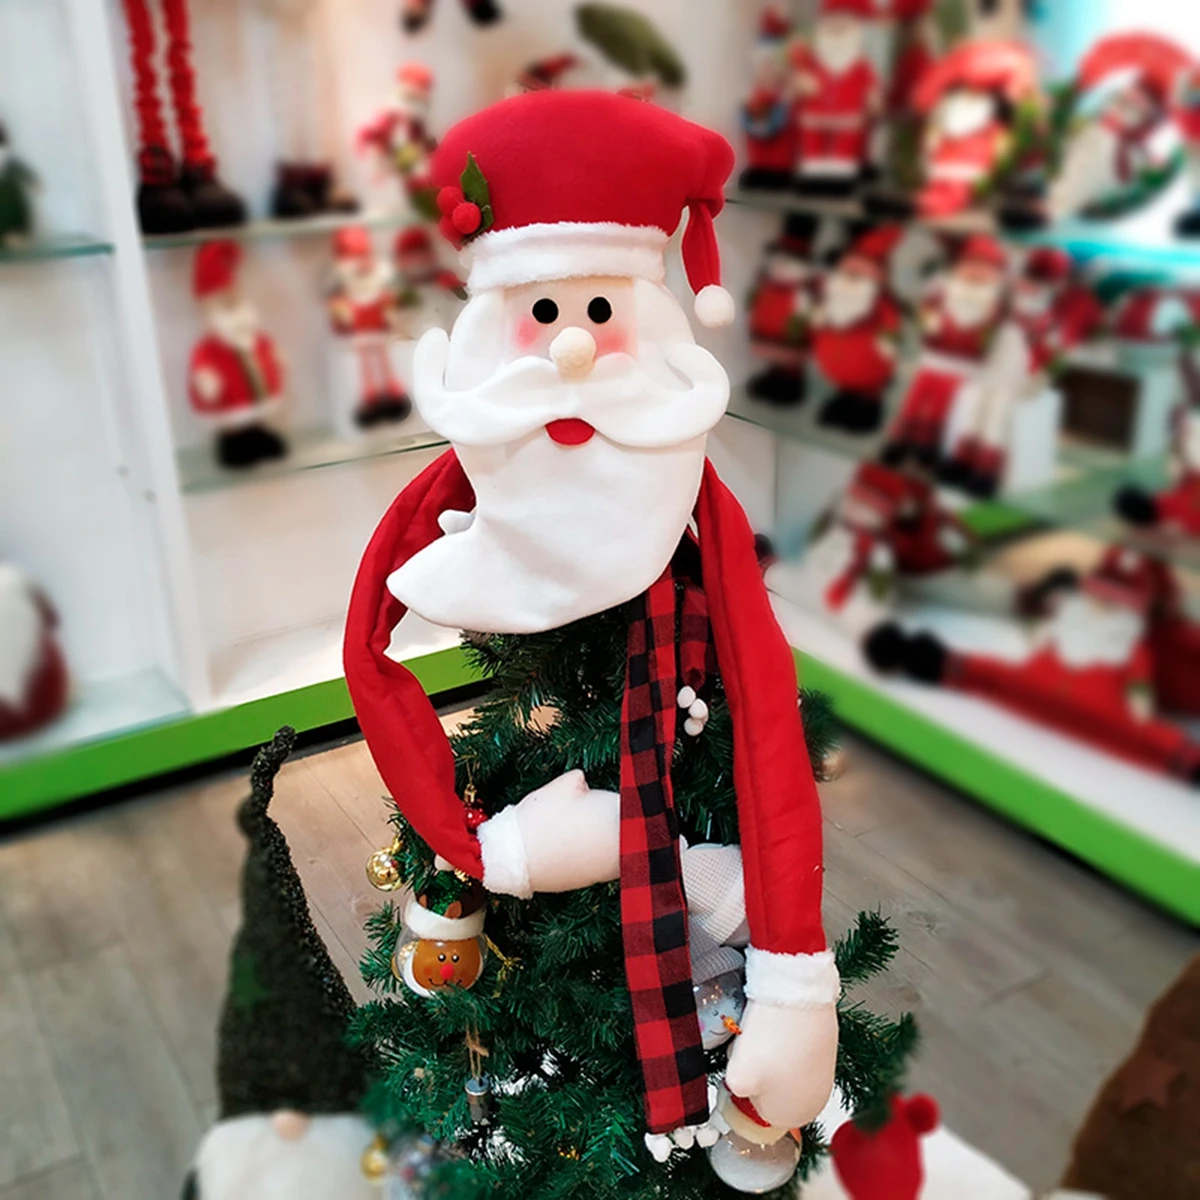 QIFU елочные украшения для дома Navidad Noel Снеговик Санта Клаус подарки на год